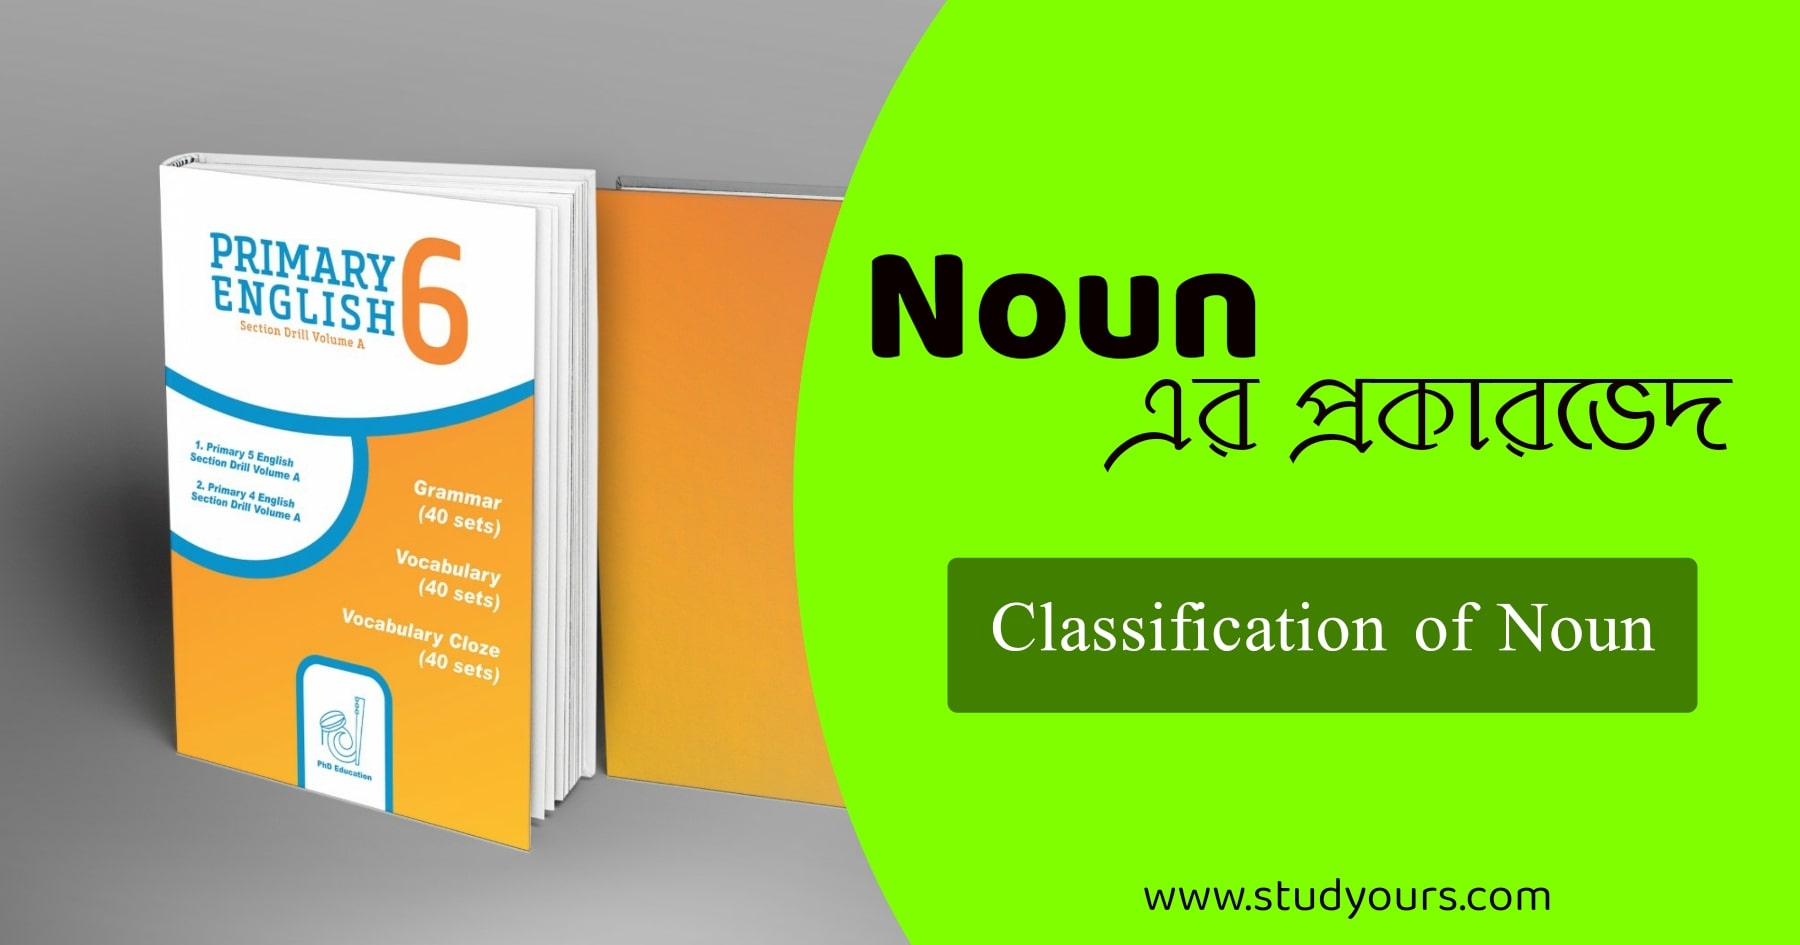 Classification of Noun